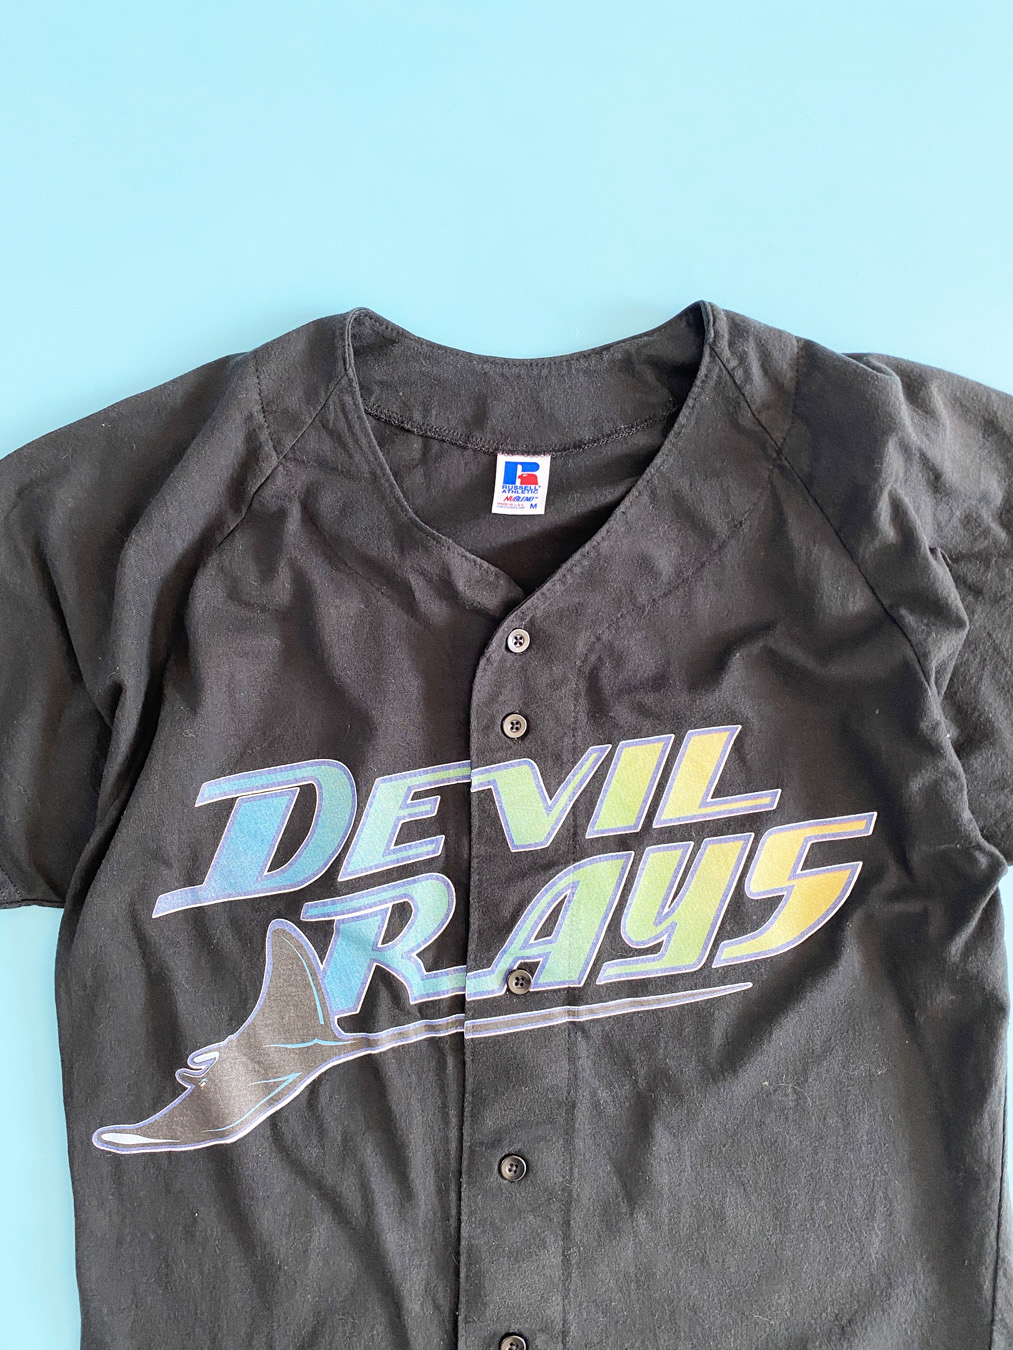 90s Tampa Bay Devil Rays Baseball Jersey - 5 Star Vintage